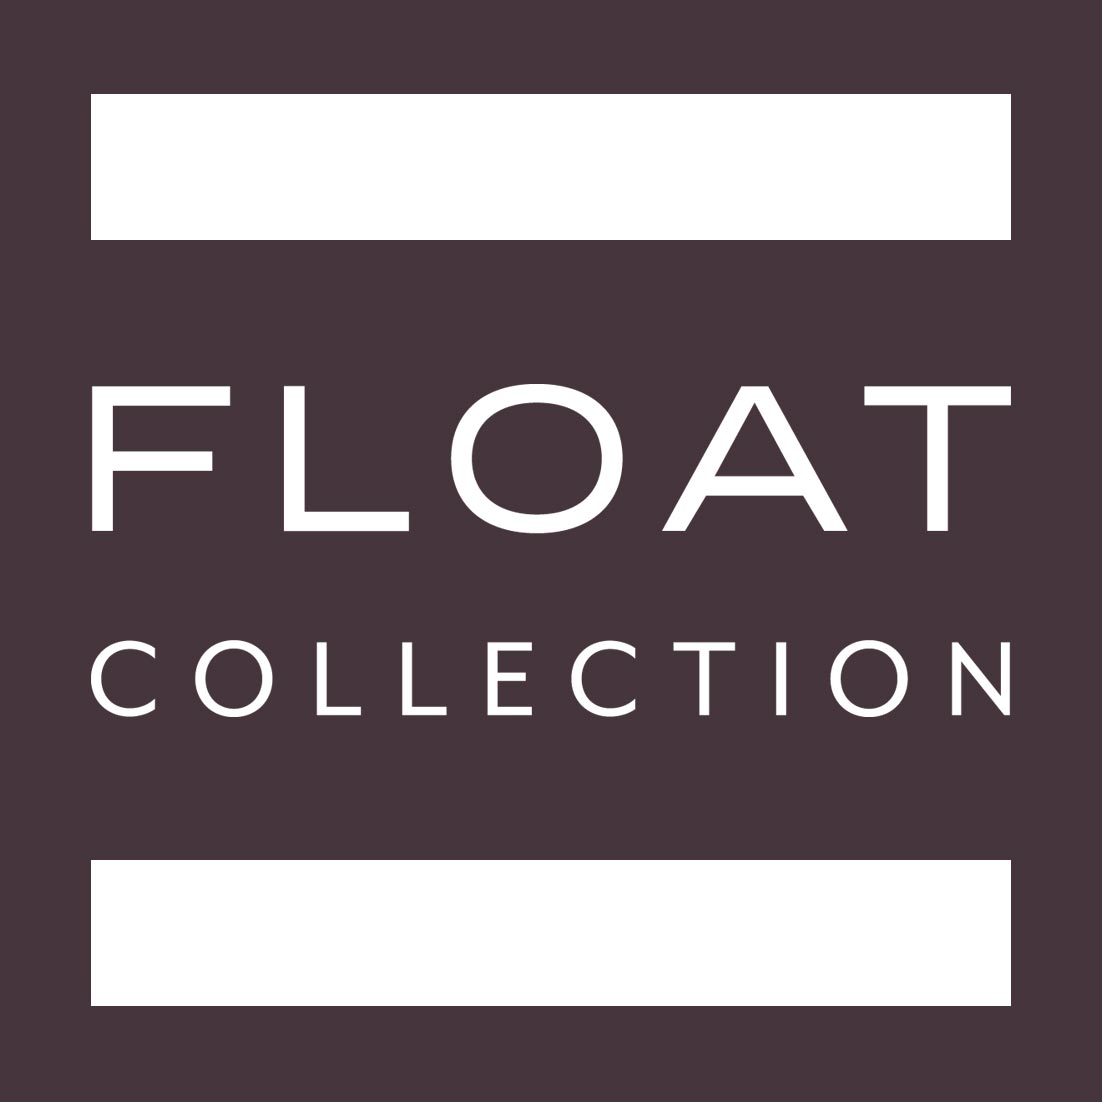 (c) Floatcollection.com